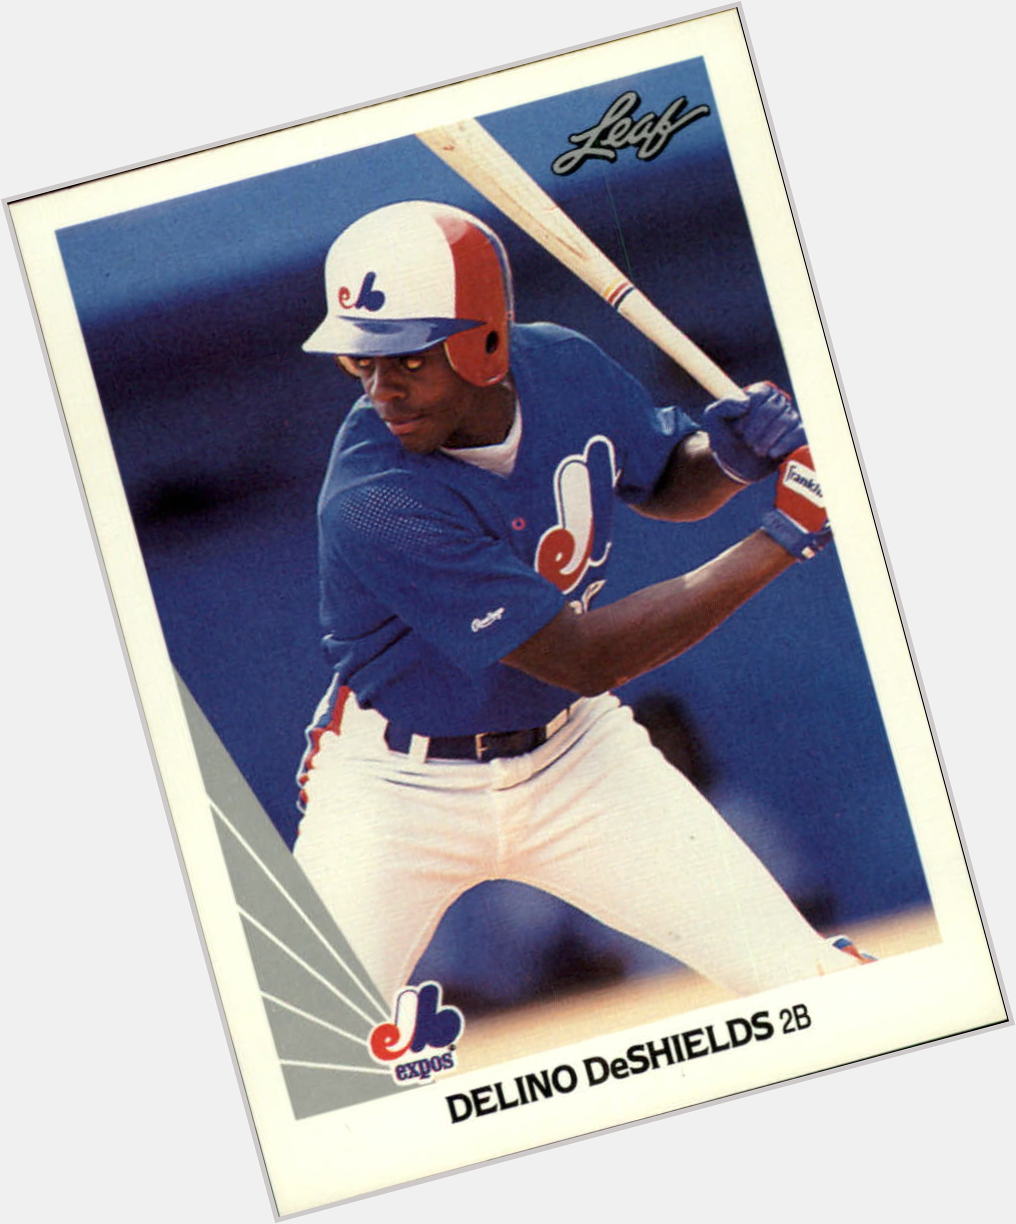 Happy 49th Birthday to former Montreal Expos second baseman Delino DeShields! 